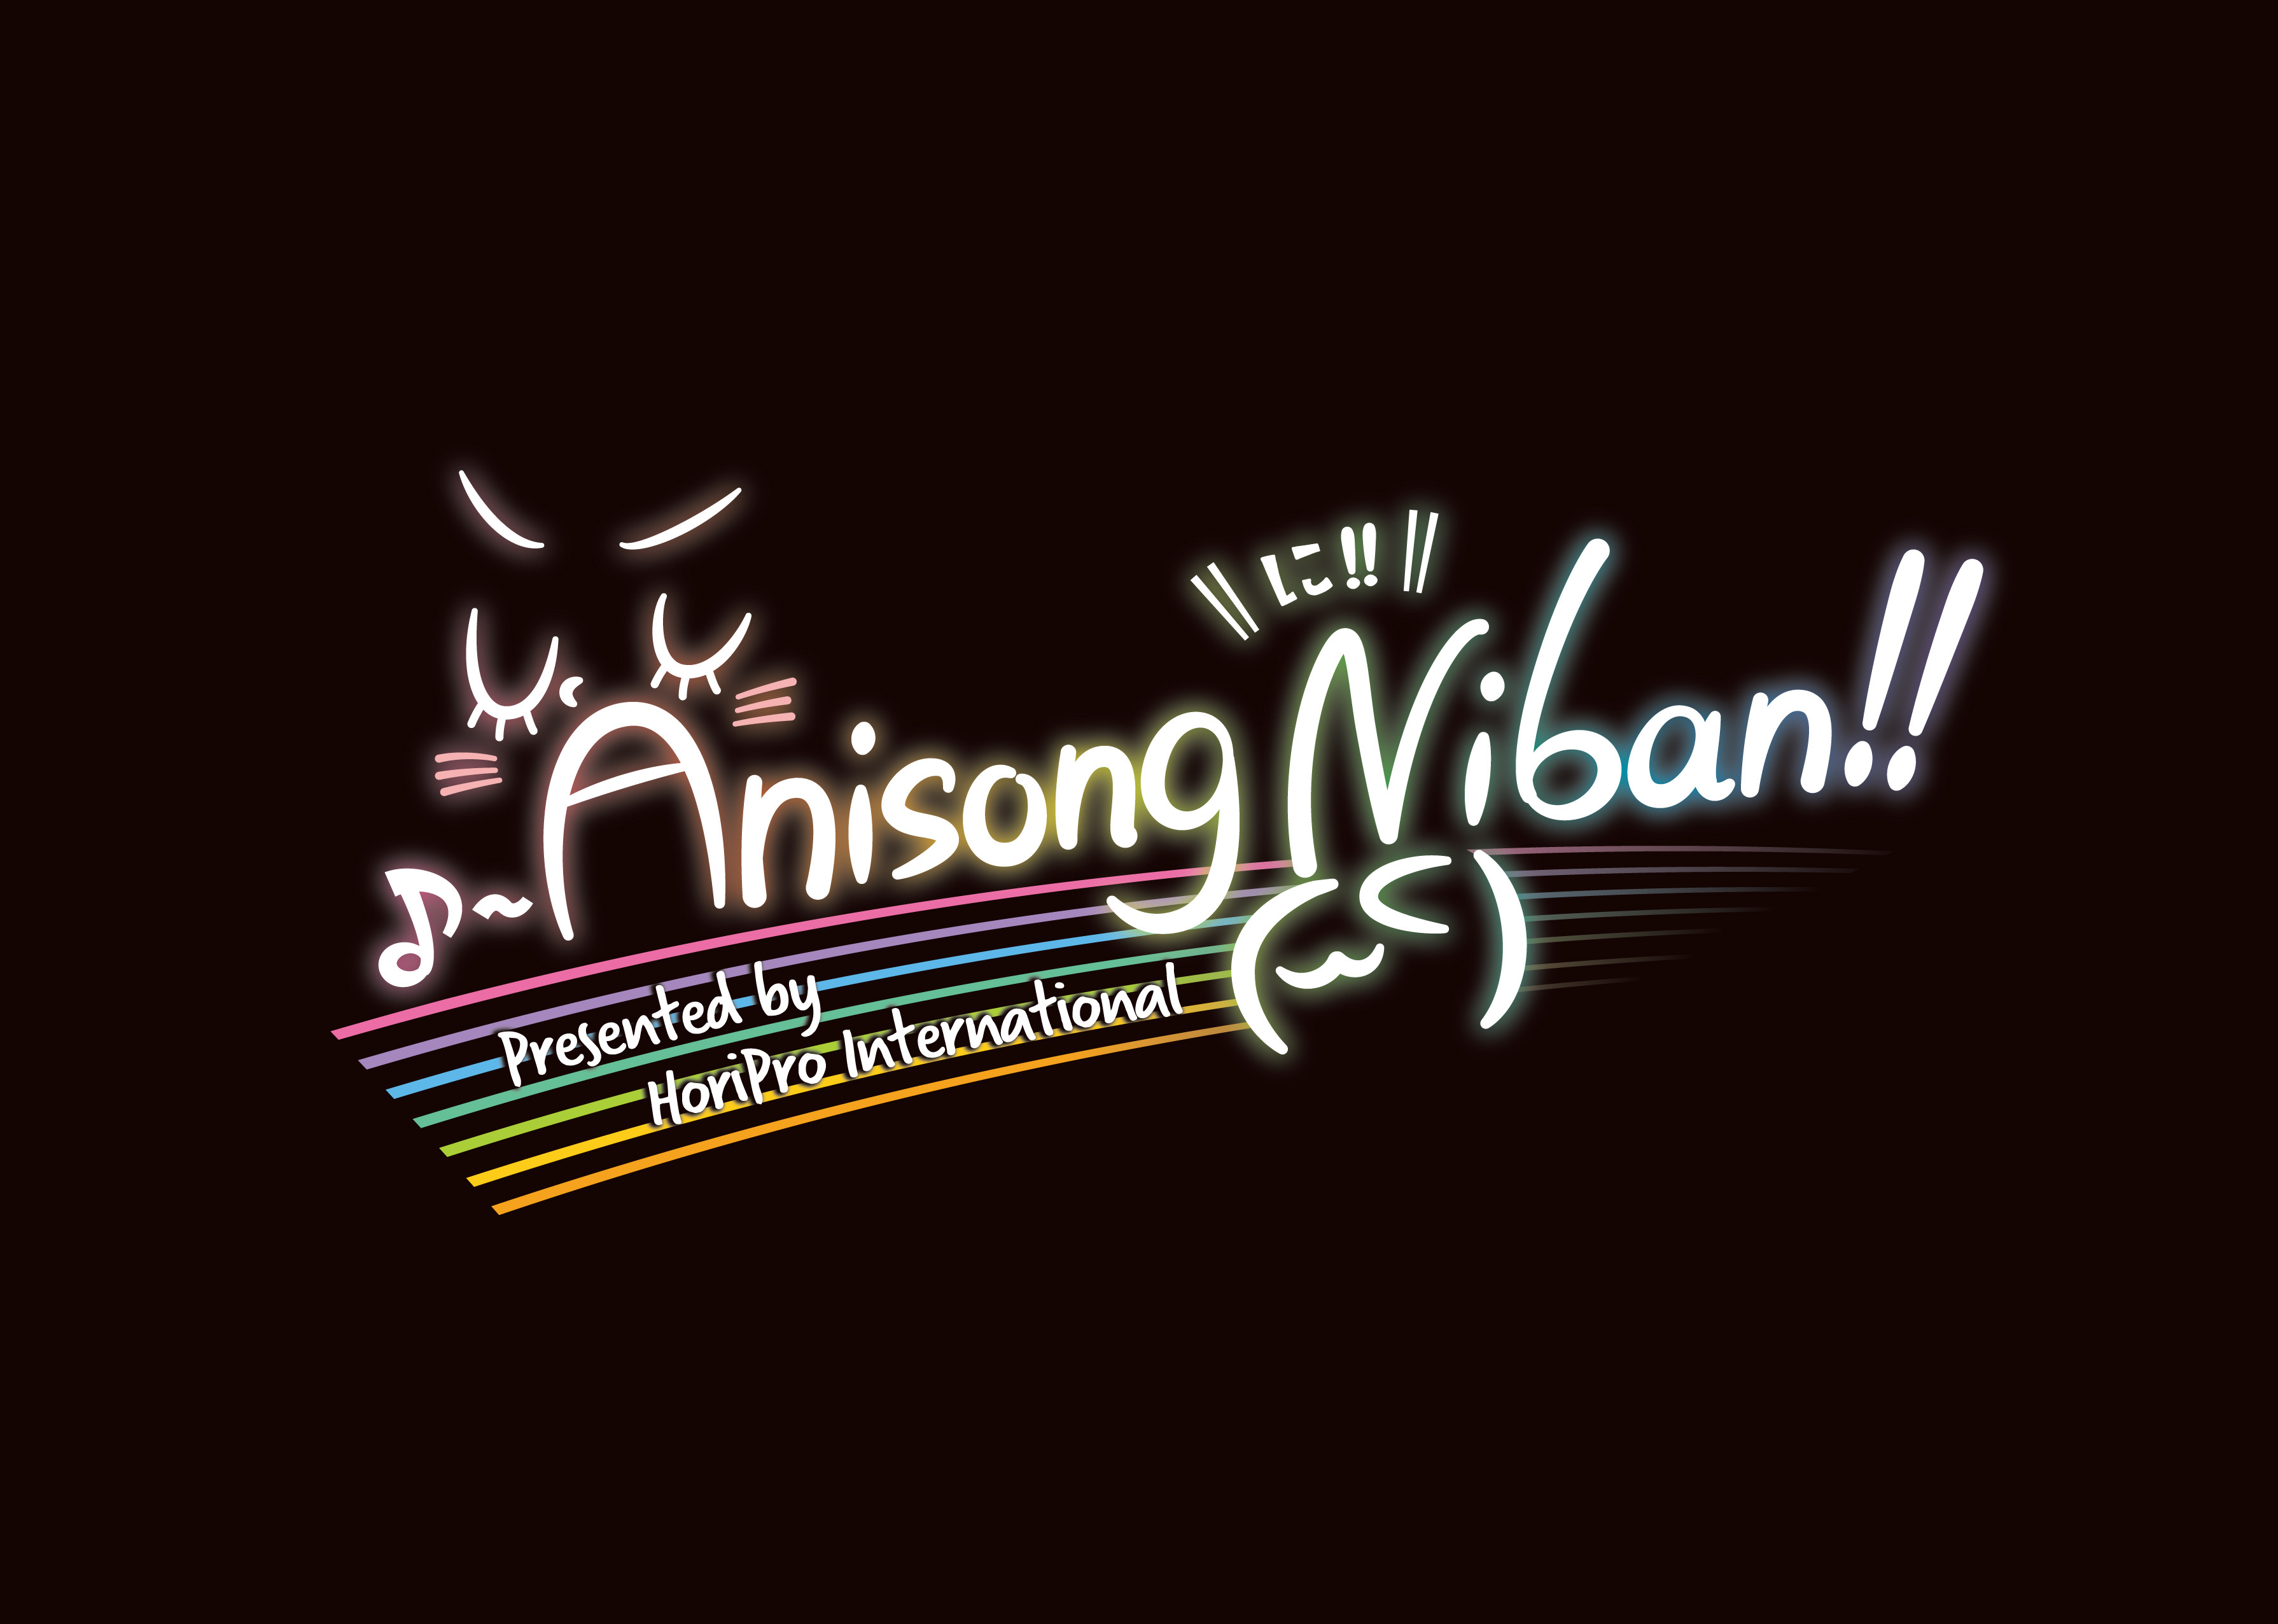 Anisong Niban!! presented by HoriPro International Vol.2